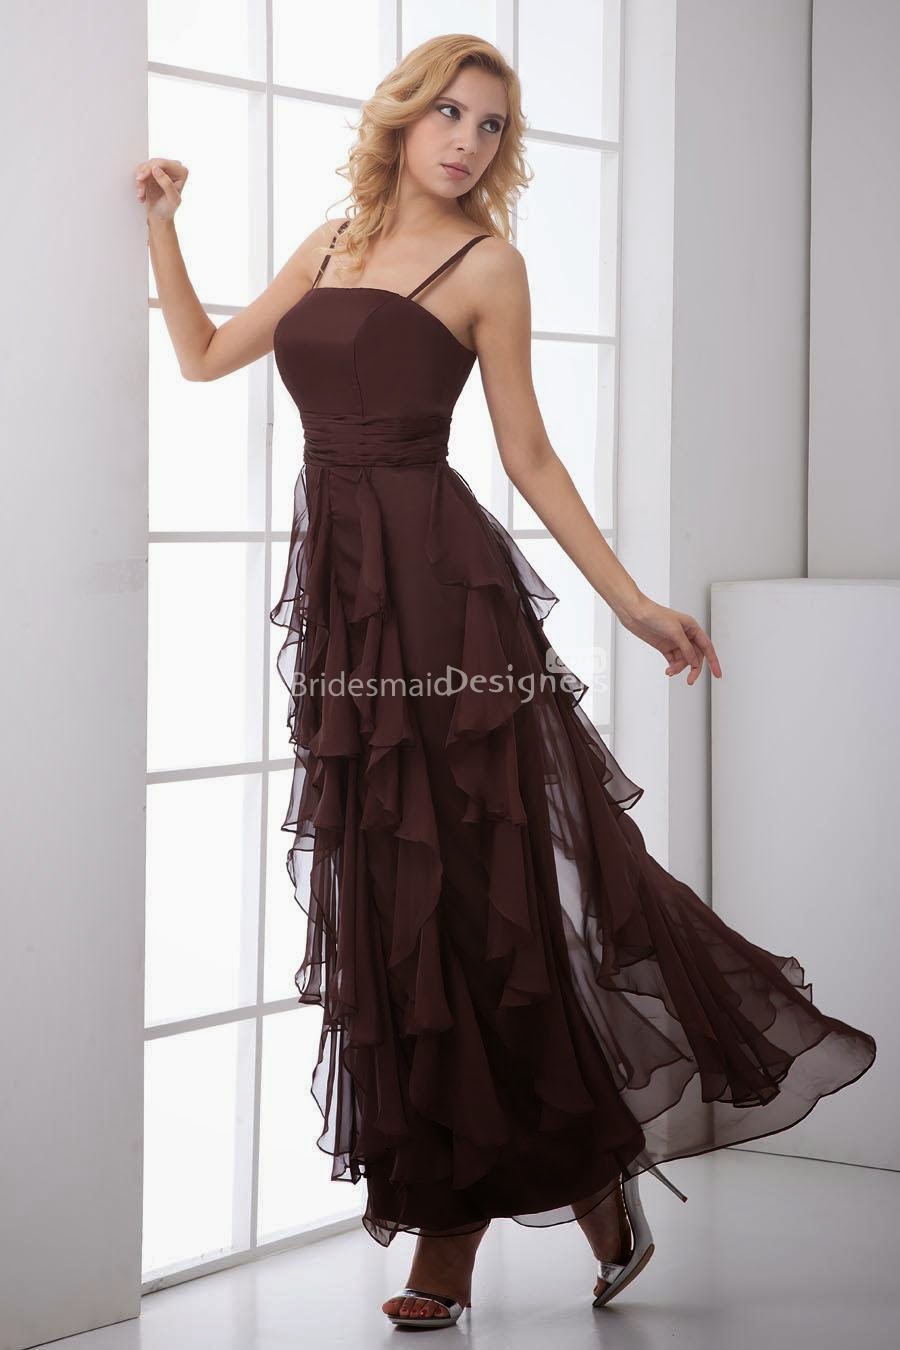 http://www.bridesmaiddesigners.com/chocolate-chiffon-tiered-bridesmaid-dress-spaghetti-straps-1011.html